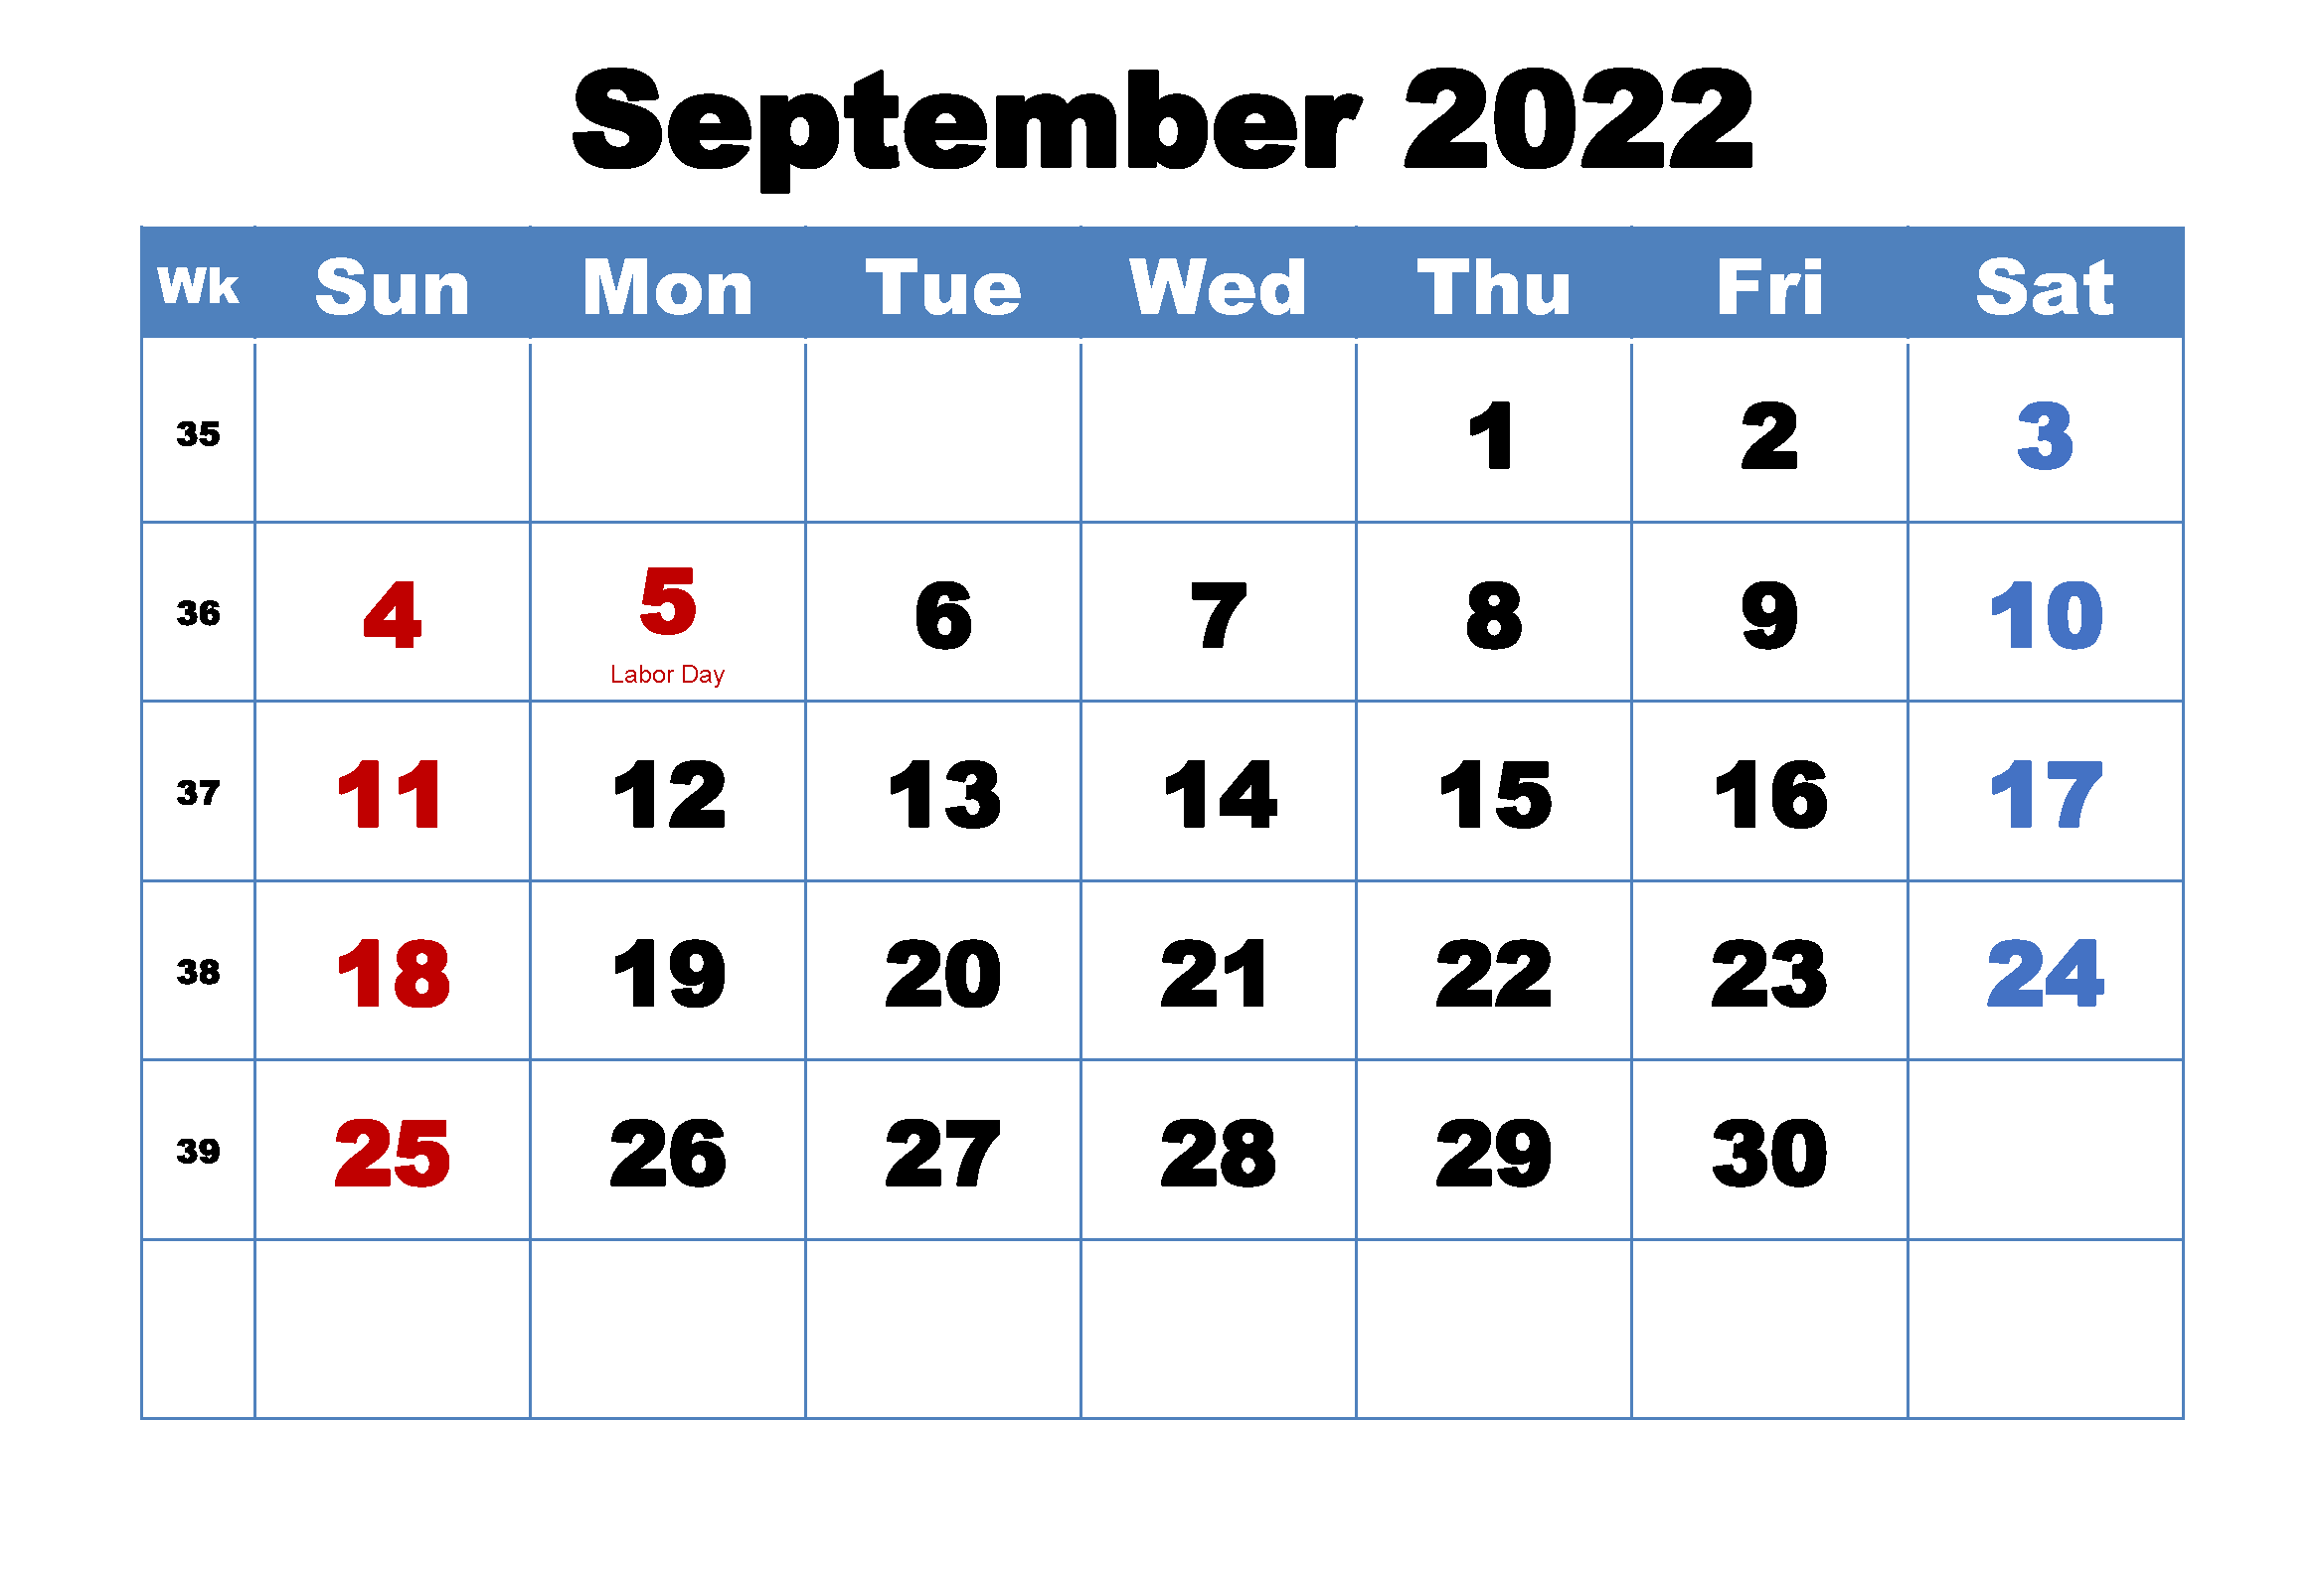 September 2022 Calendar With Holidays Template